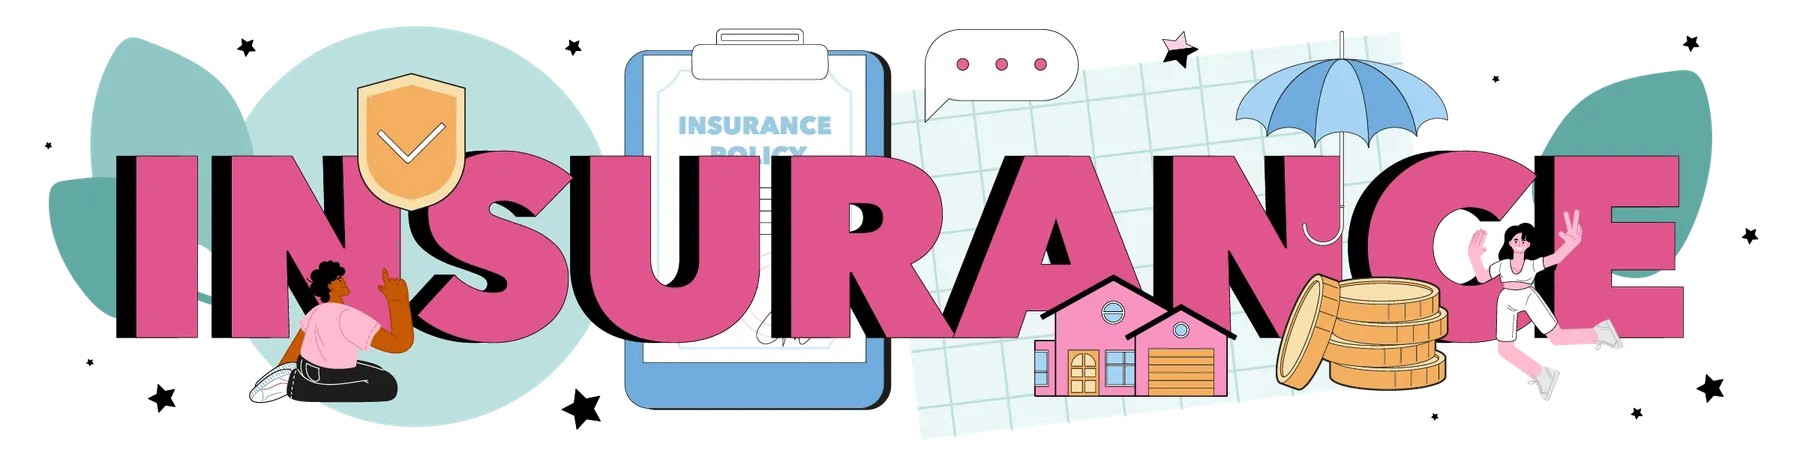 Property insurance  Illustration